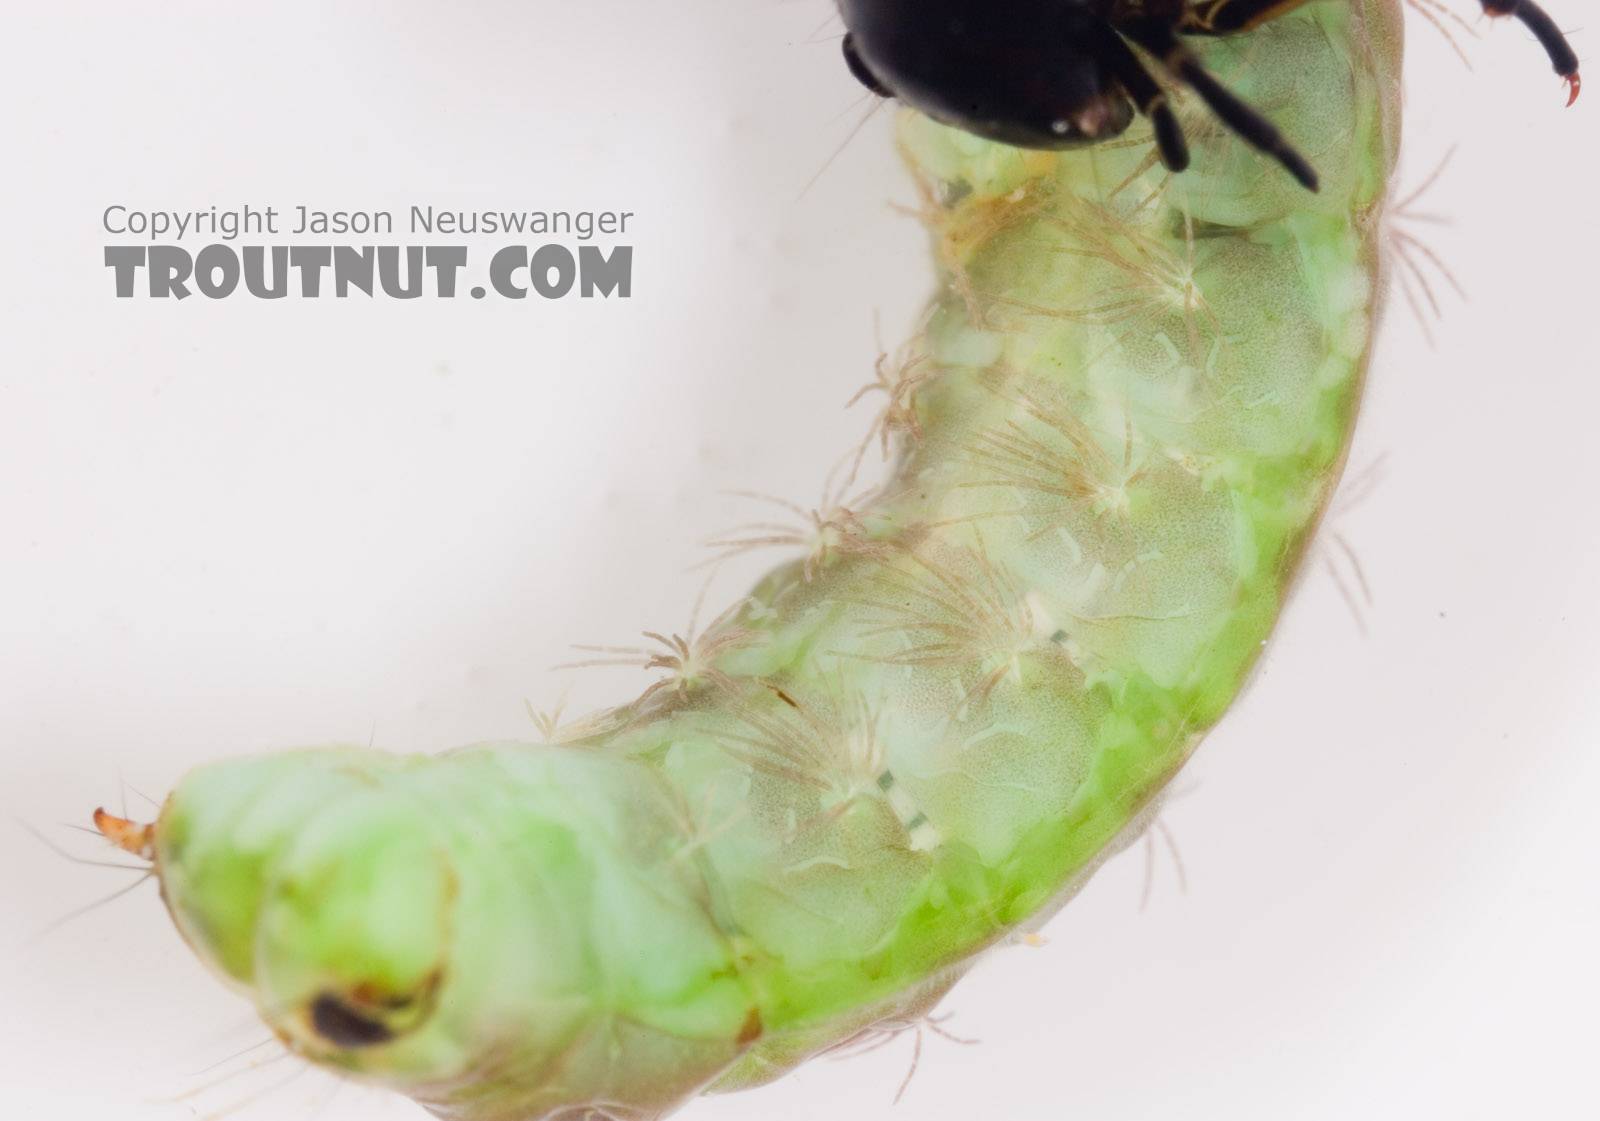 Psilotreta labida (Dark Blue Sedge) Caddisfly Larva from Fall Creek in New York